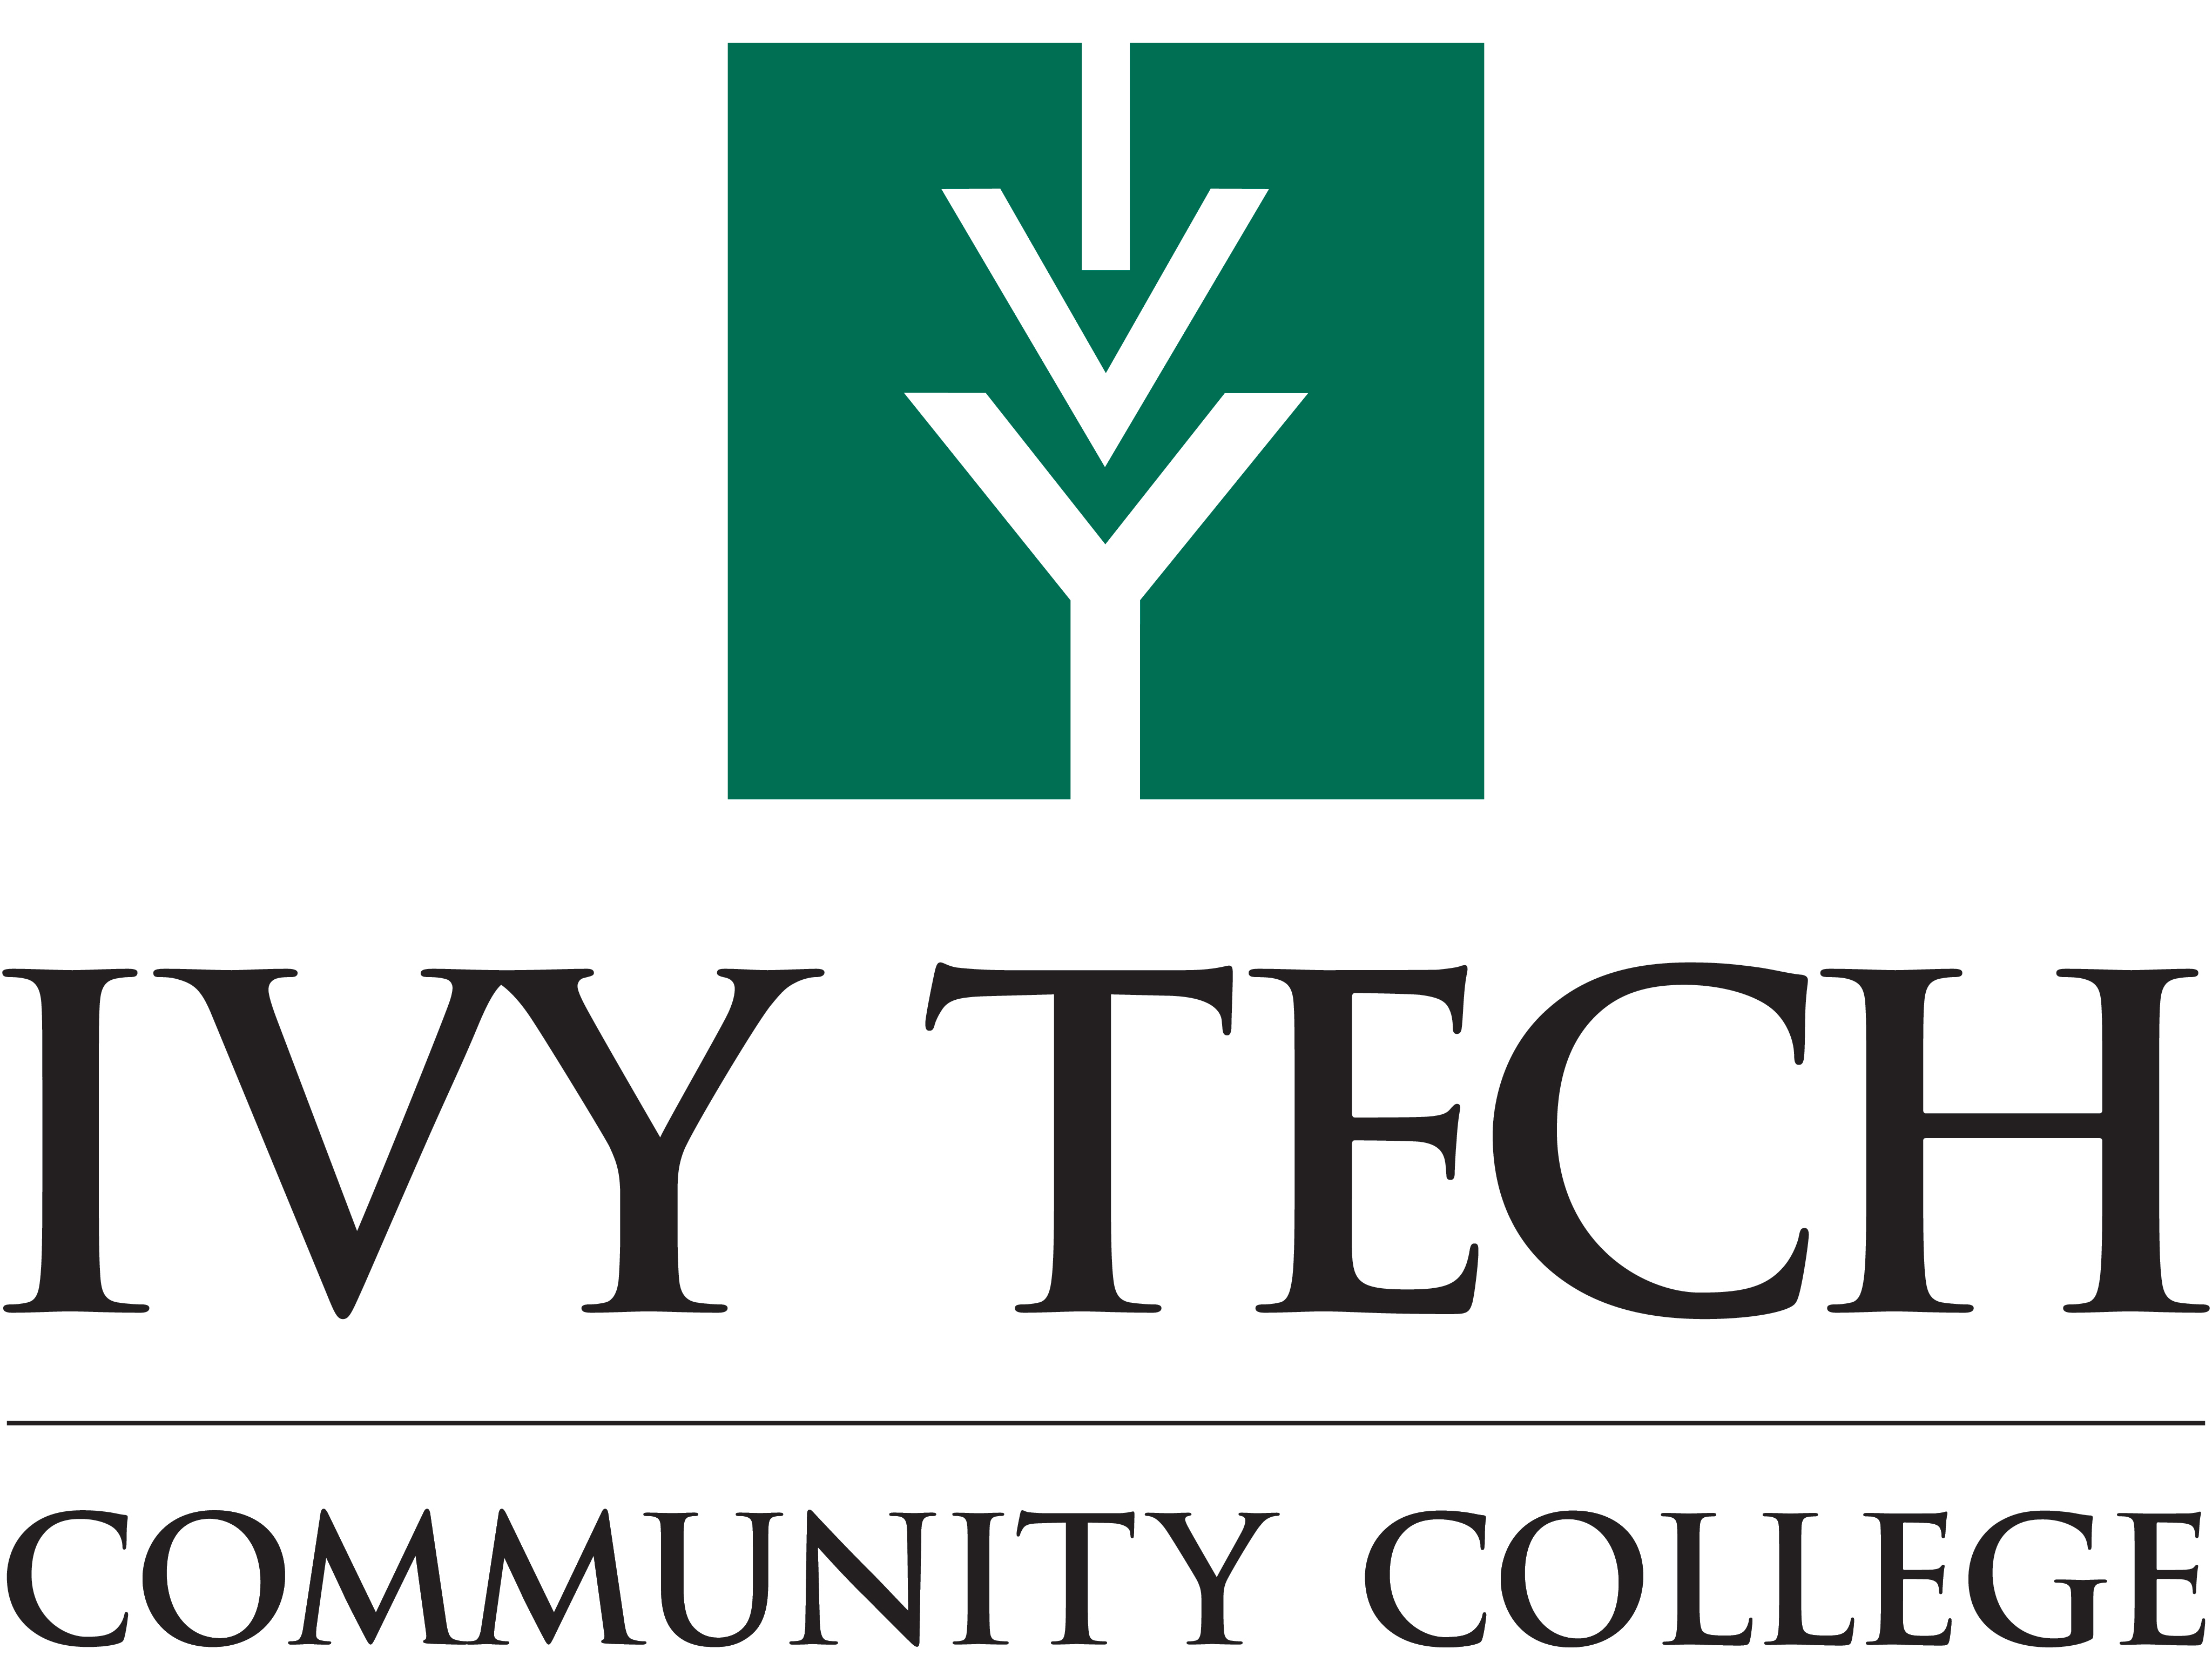 Ivy Tech Community College Bloomington